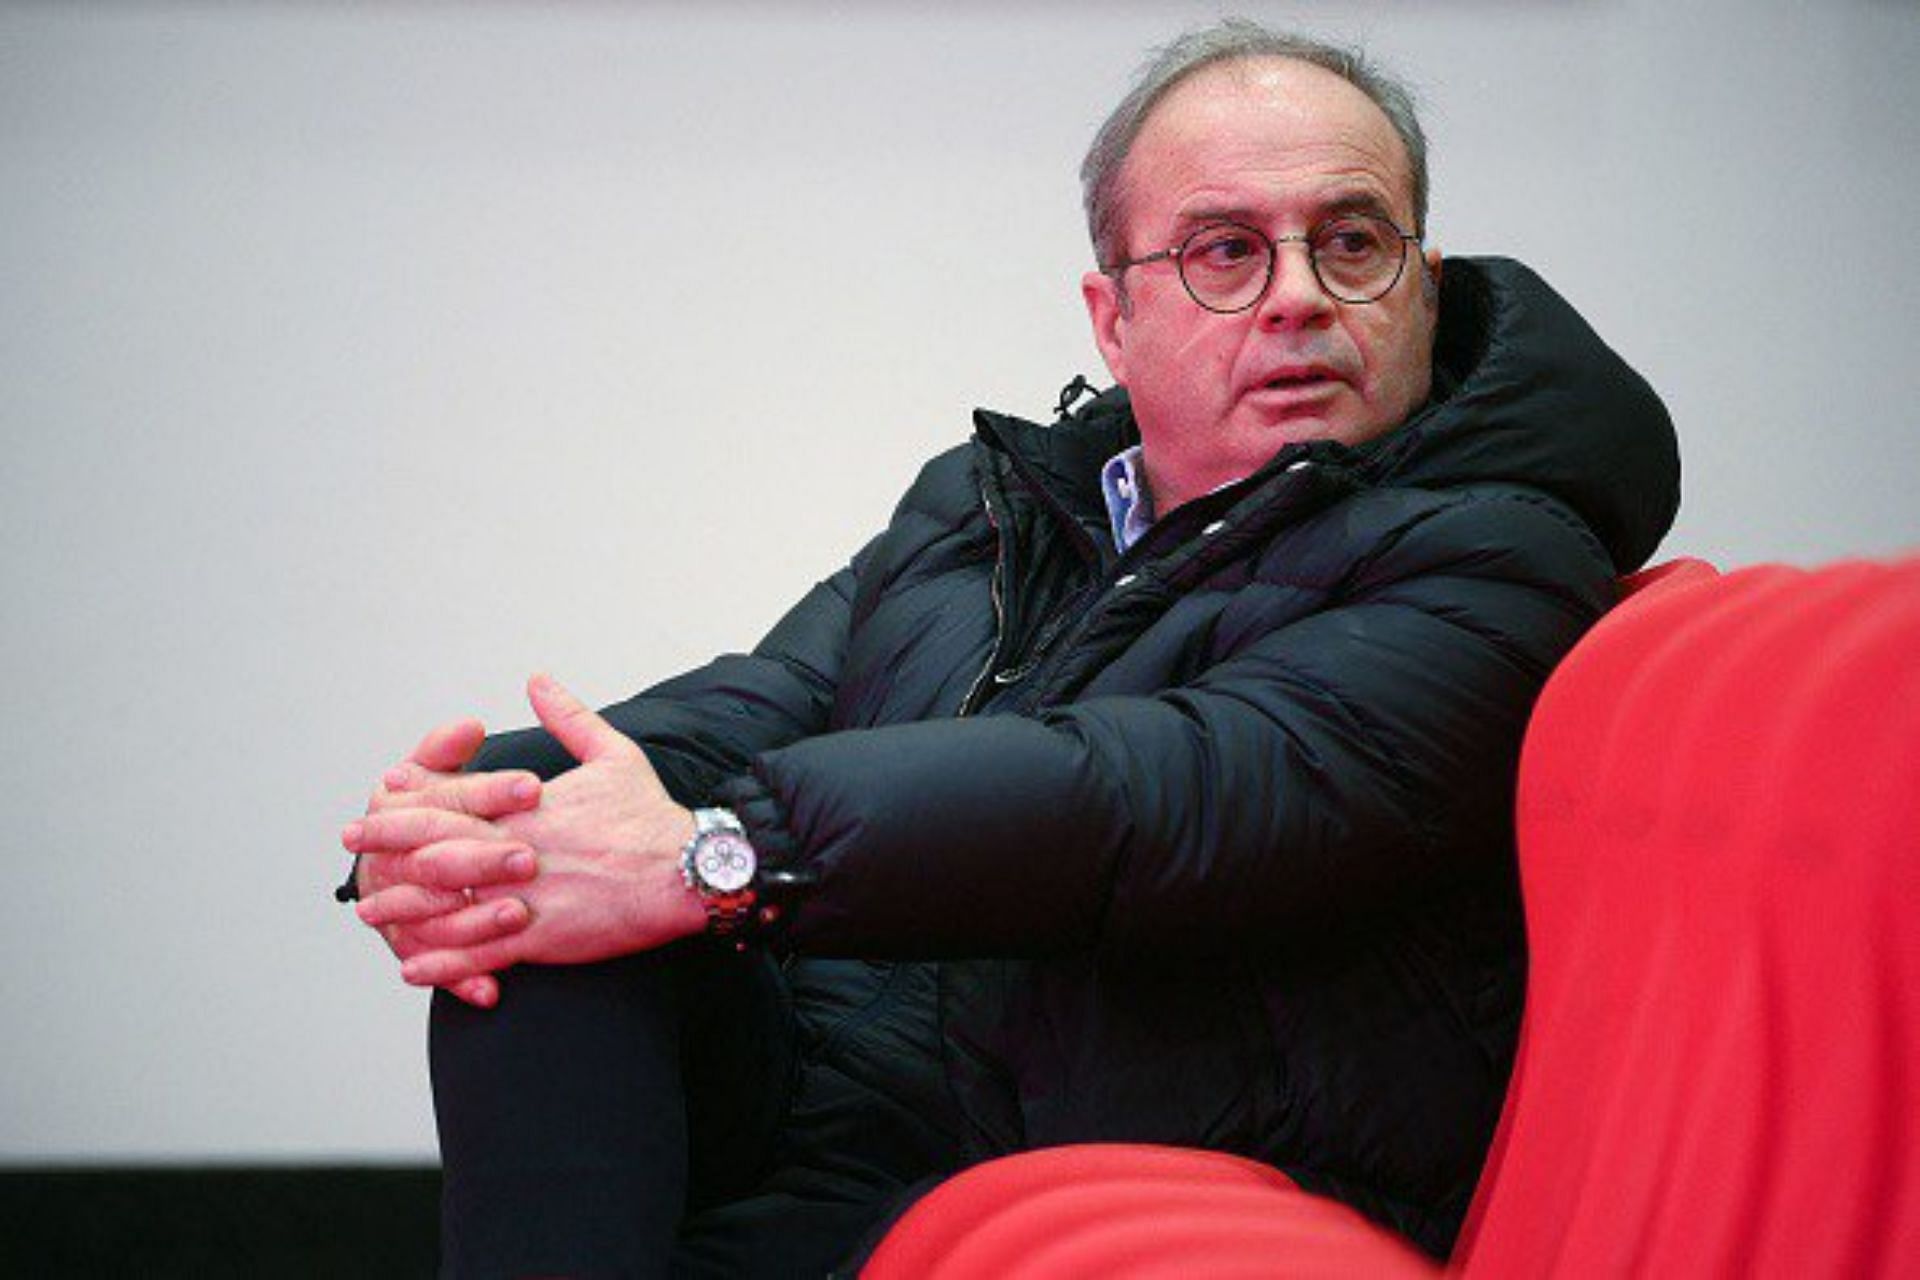 PSG sporting director Luis Campos